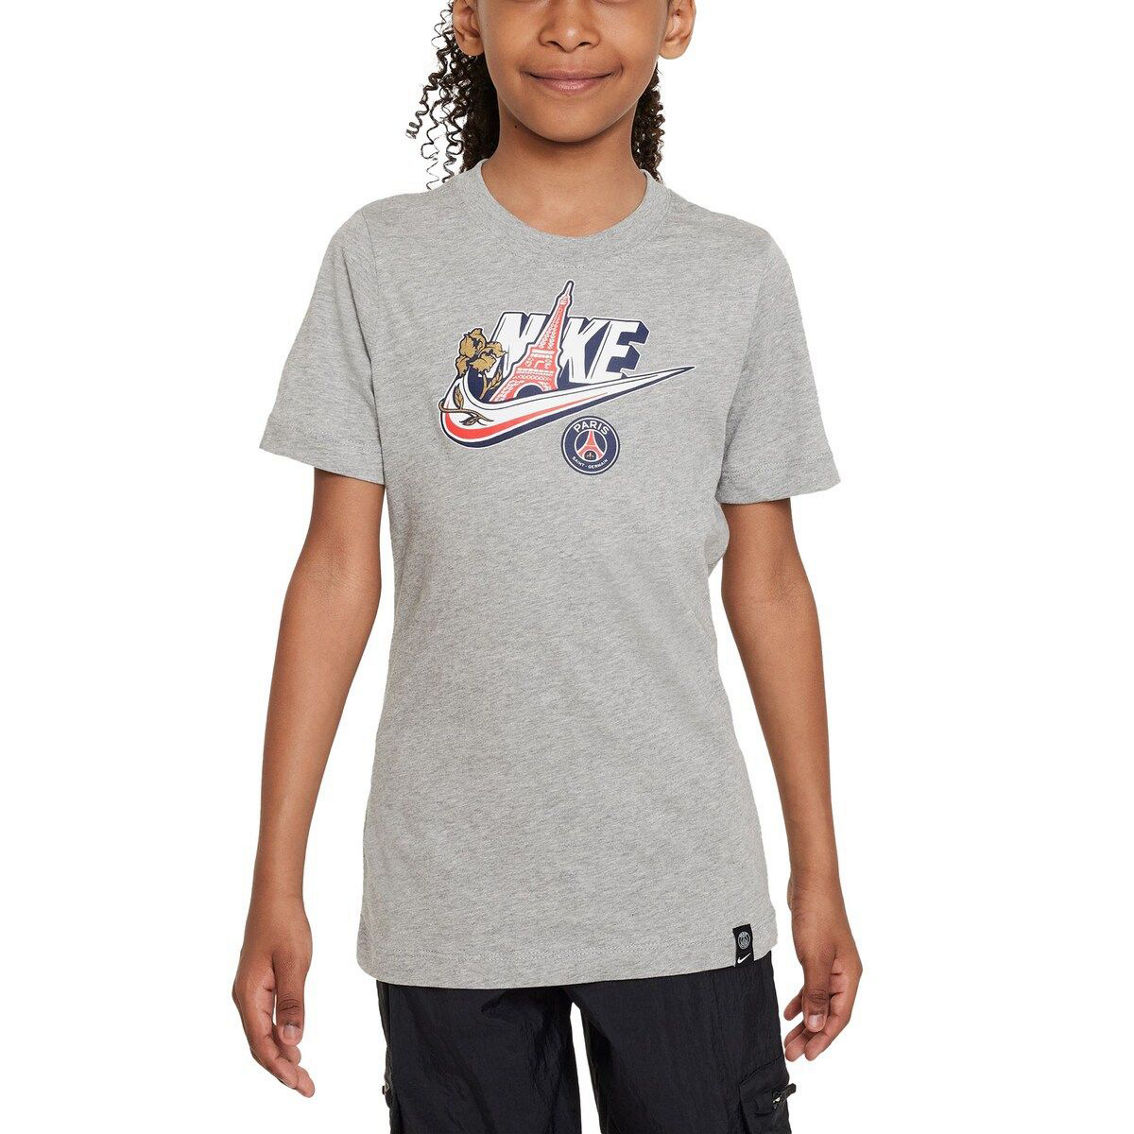 Nike Youth Heather Gray Paris Saint-Germain Futura T-Shirt - Image 2 of 3